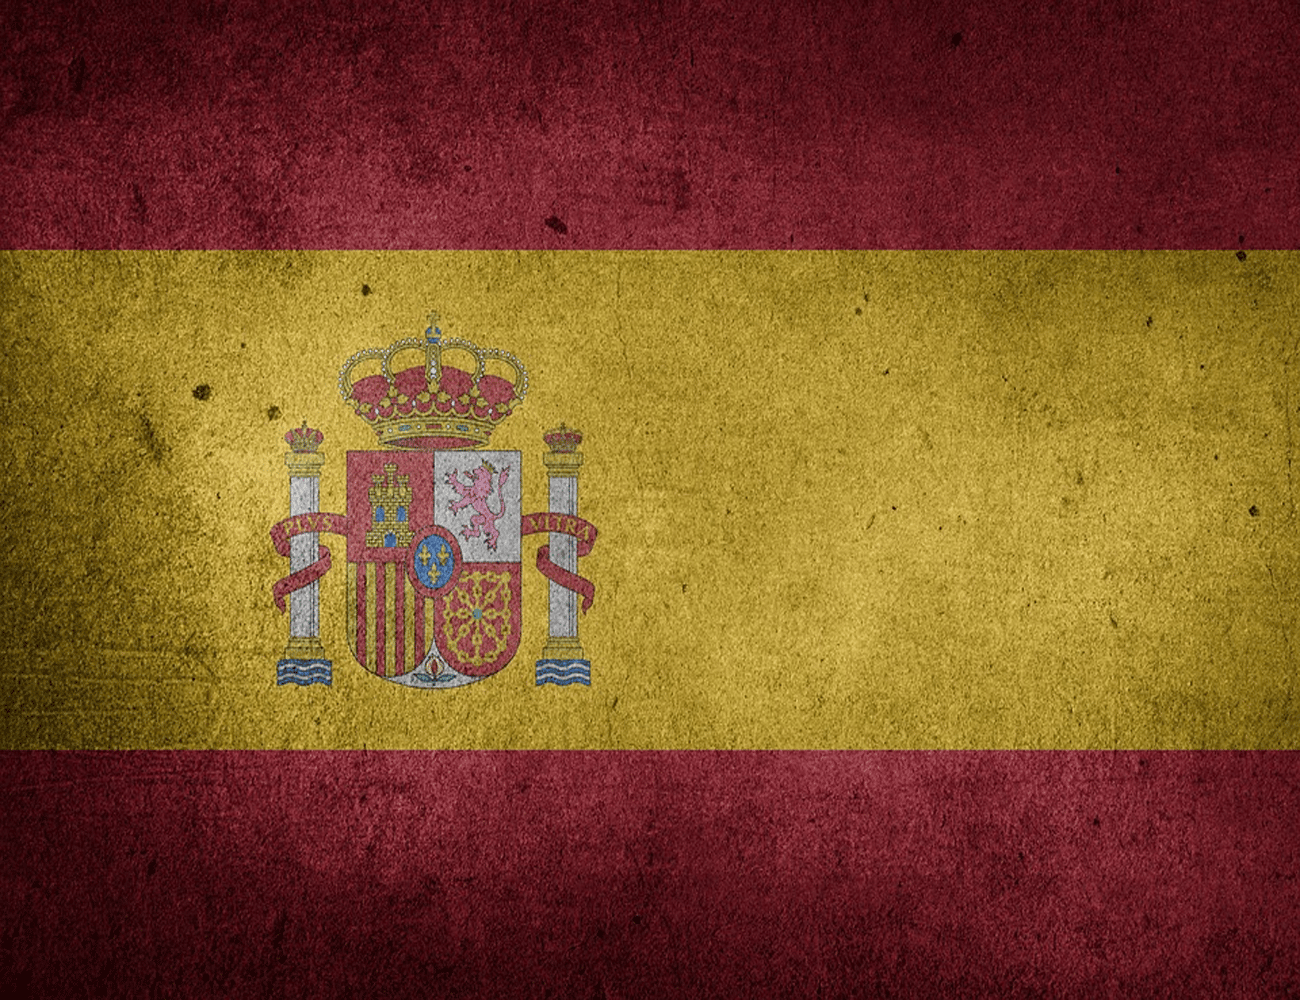 Etudier en Espagne